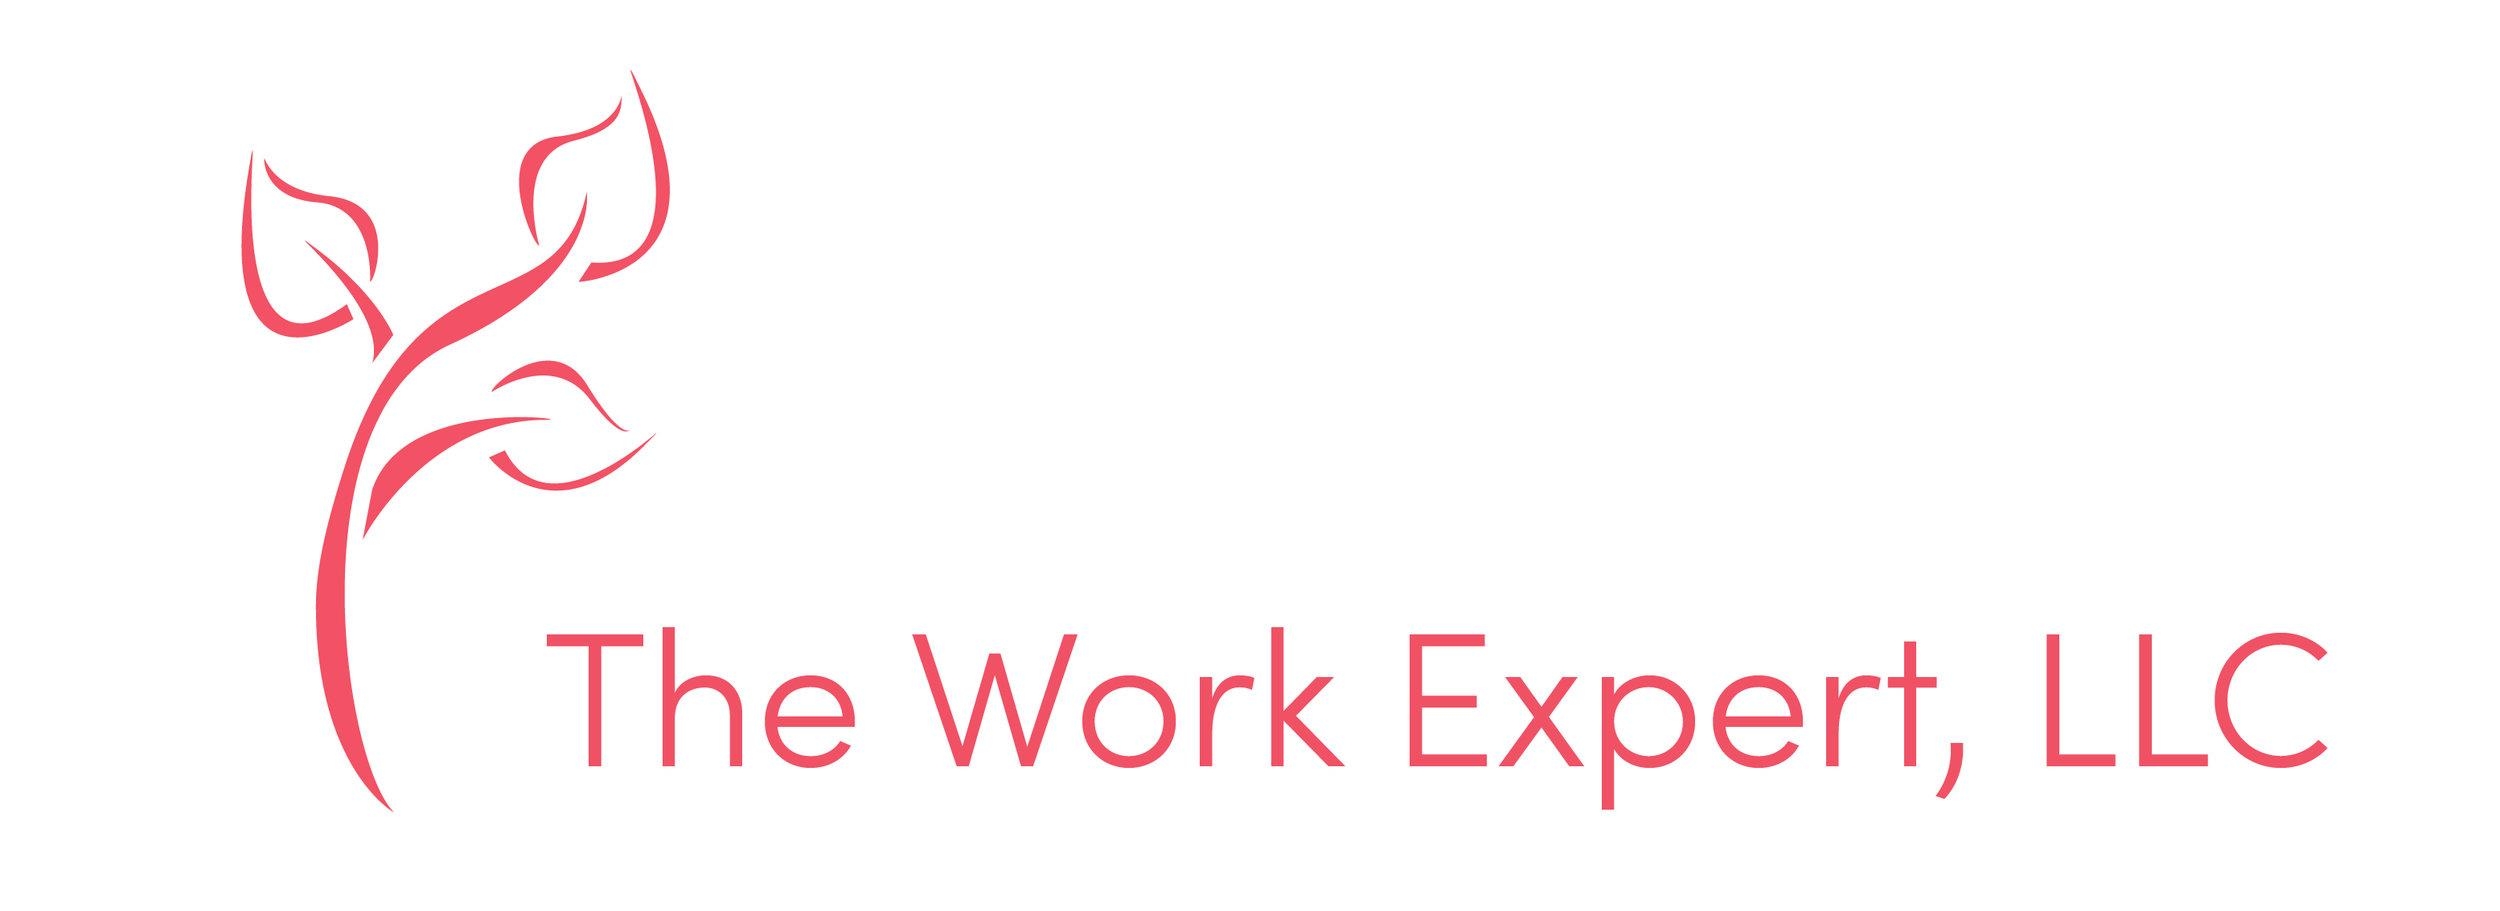 The Work Expert, LLC